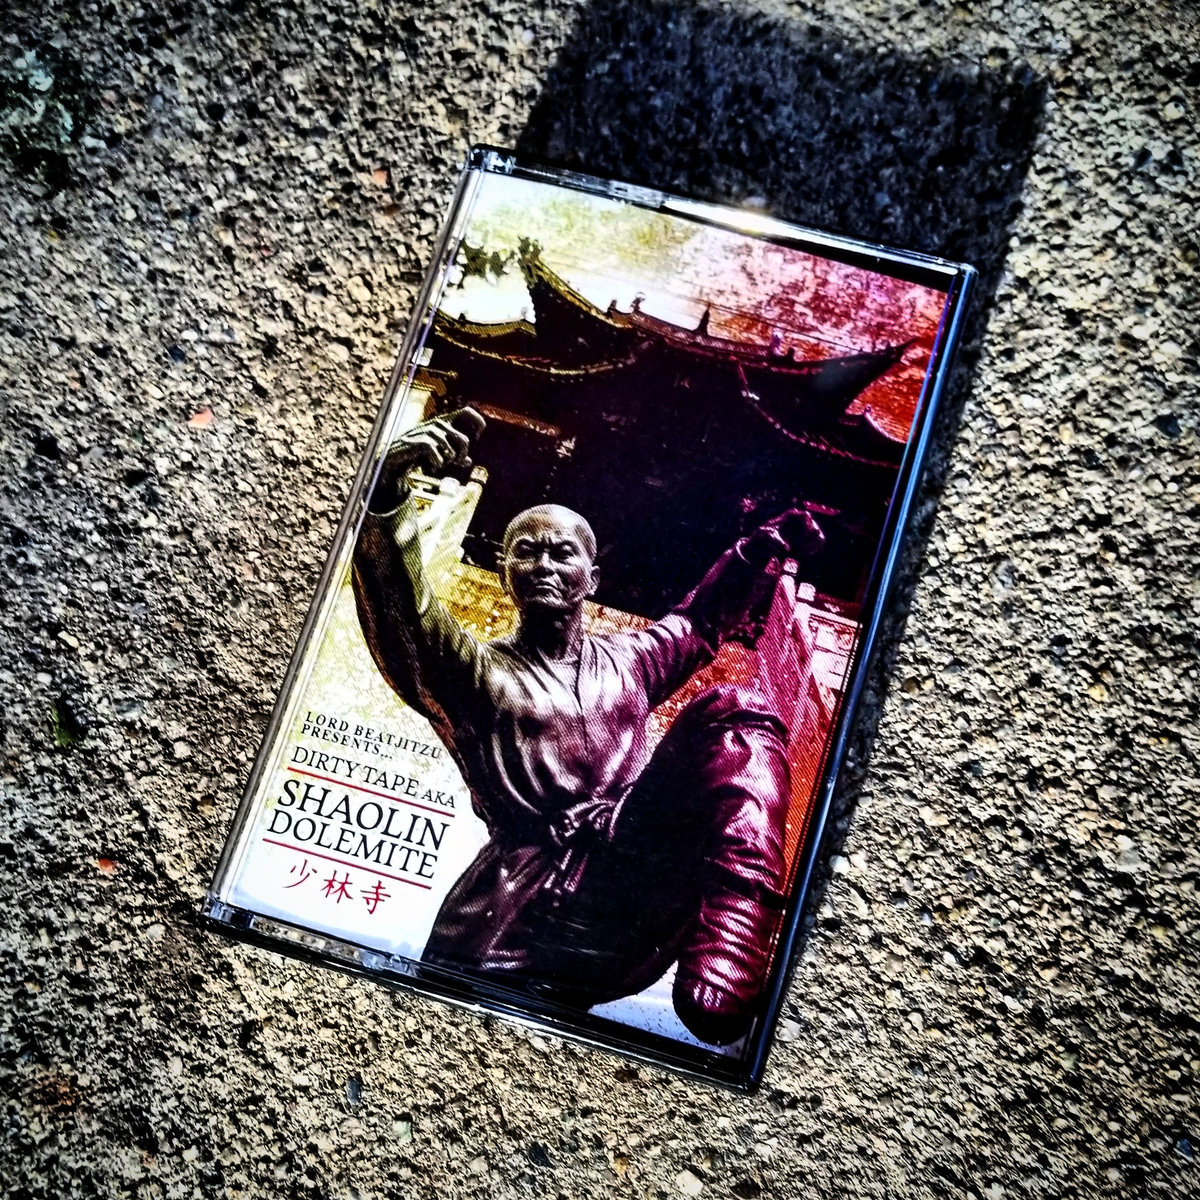 Lord Beatjitzu - Dirty Tape AKA Shaolin Dolemite | LISTEN | Chocolate ...